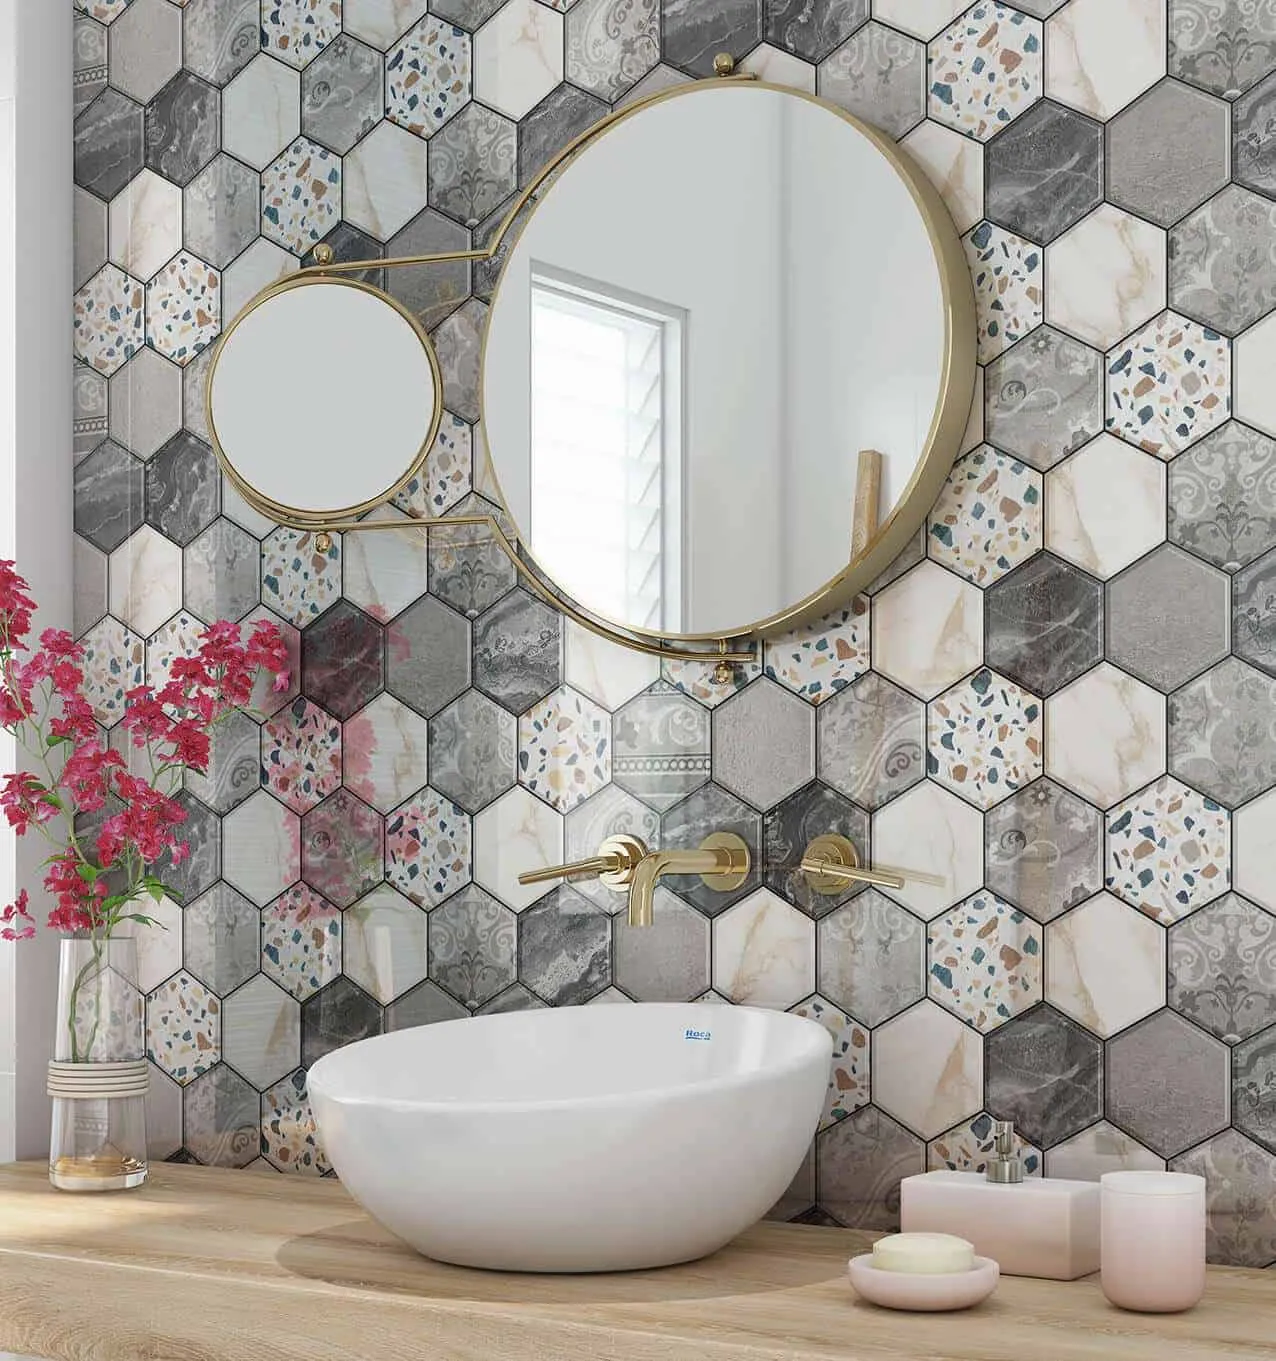 A modern designer bathroom flooring tiles & tiling design with hexagonal slabs